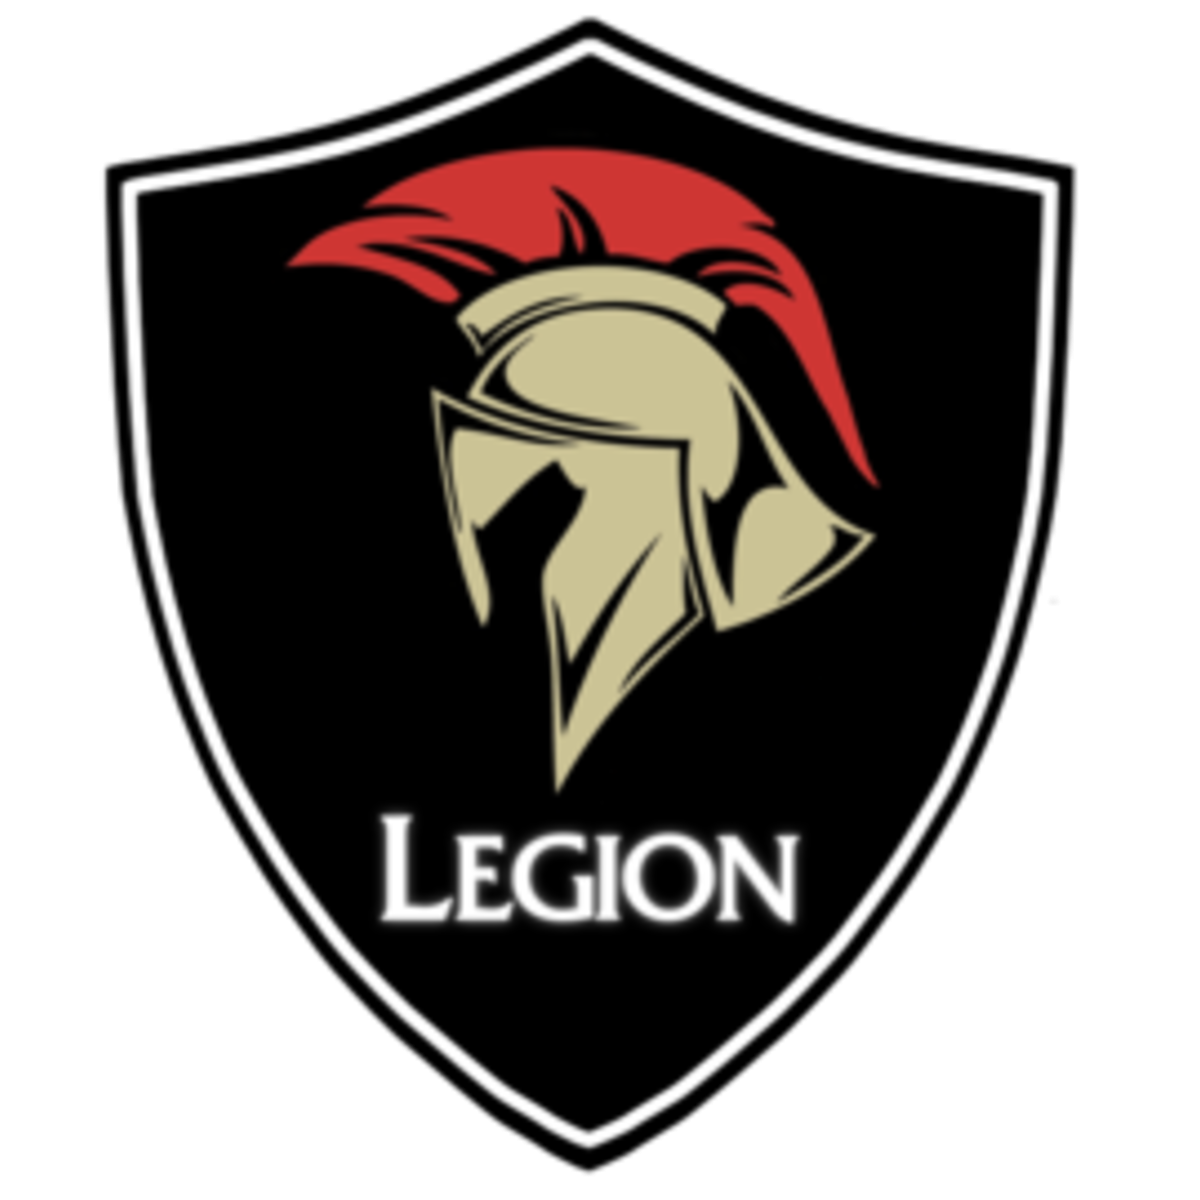 Blackstone legion emblem